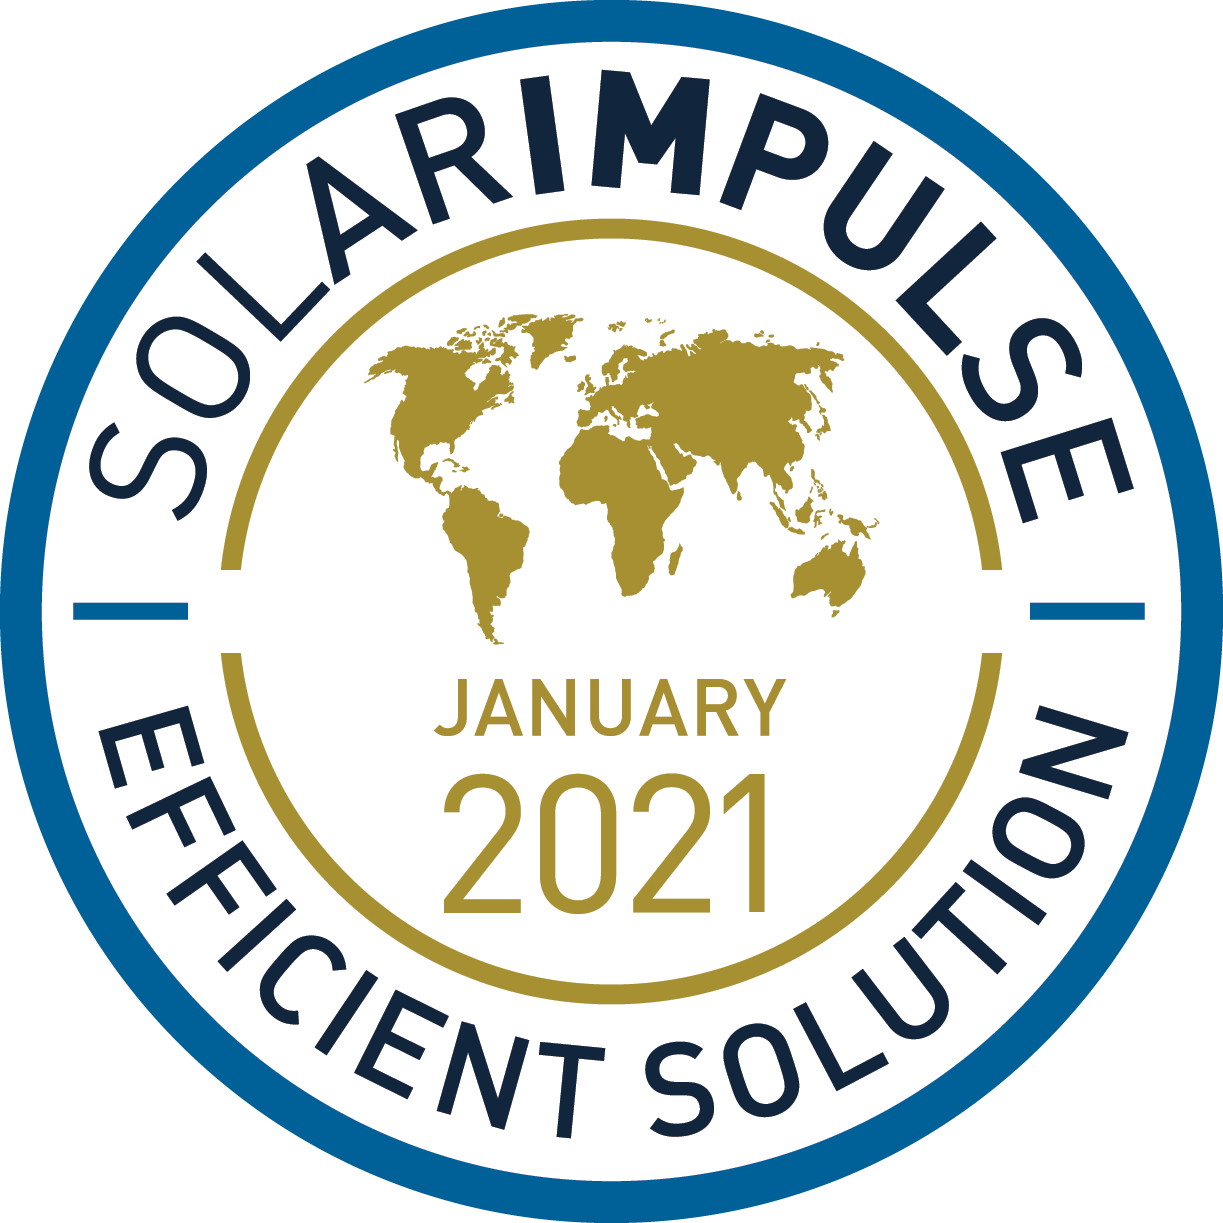 Solar Impulse Efficient Solution Label